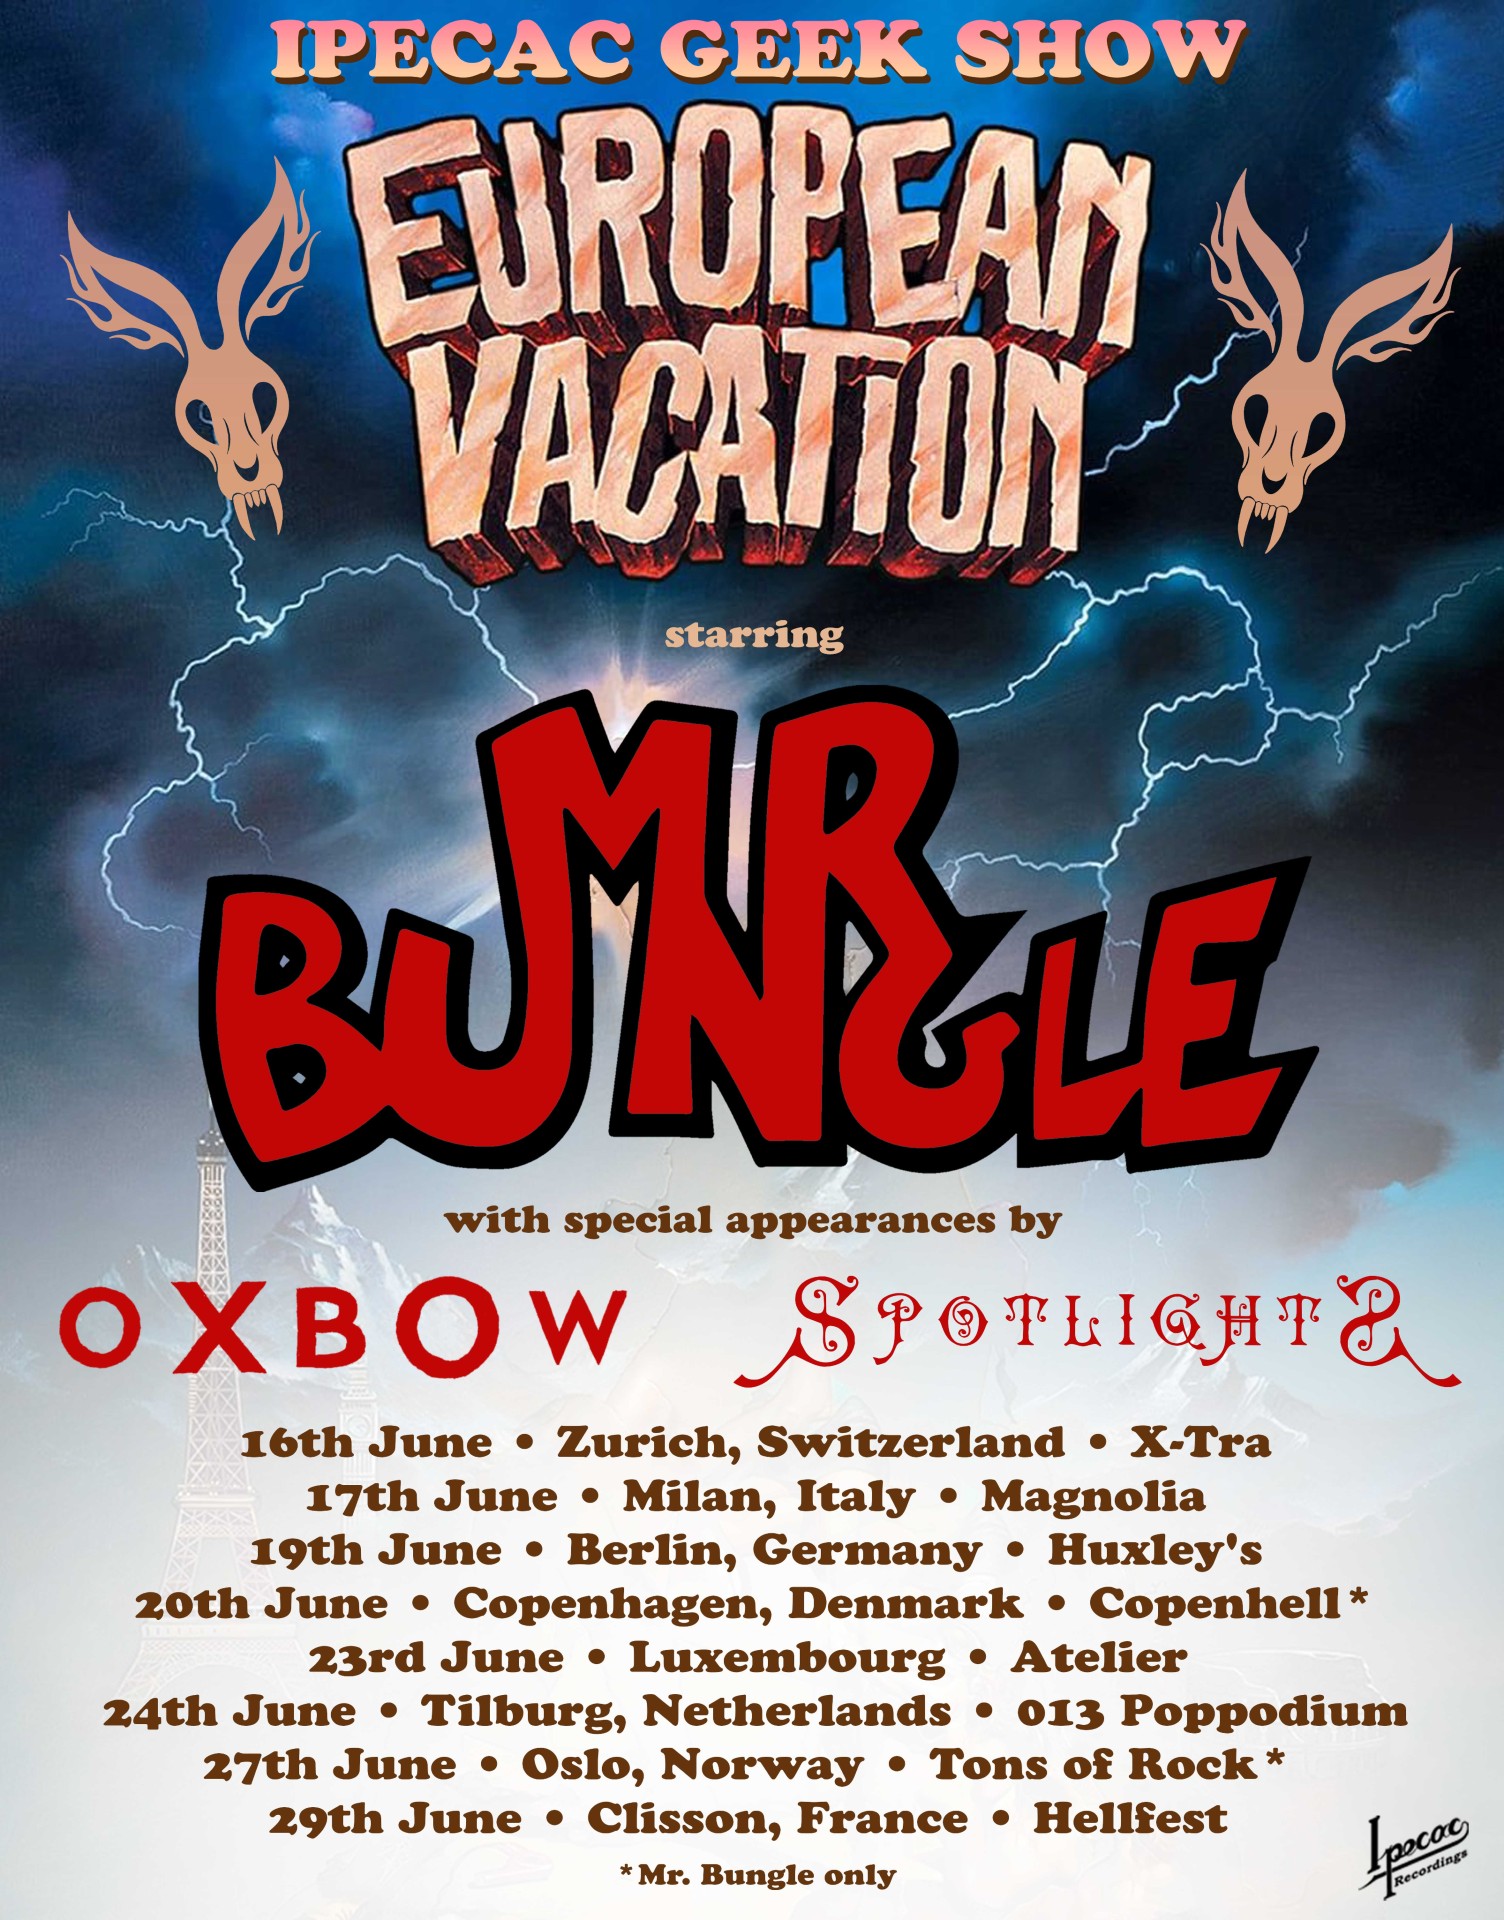 Mr. Bungle, Oxbow & Spotlights Ipecac “Geek Show European Vacation” tour flyer